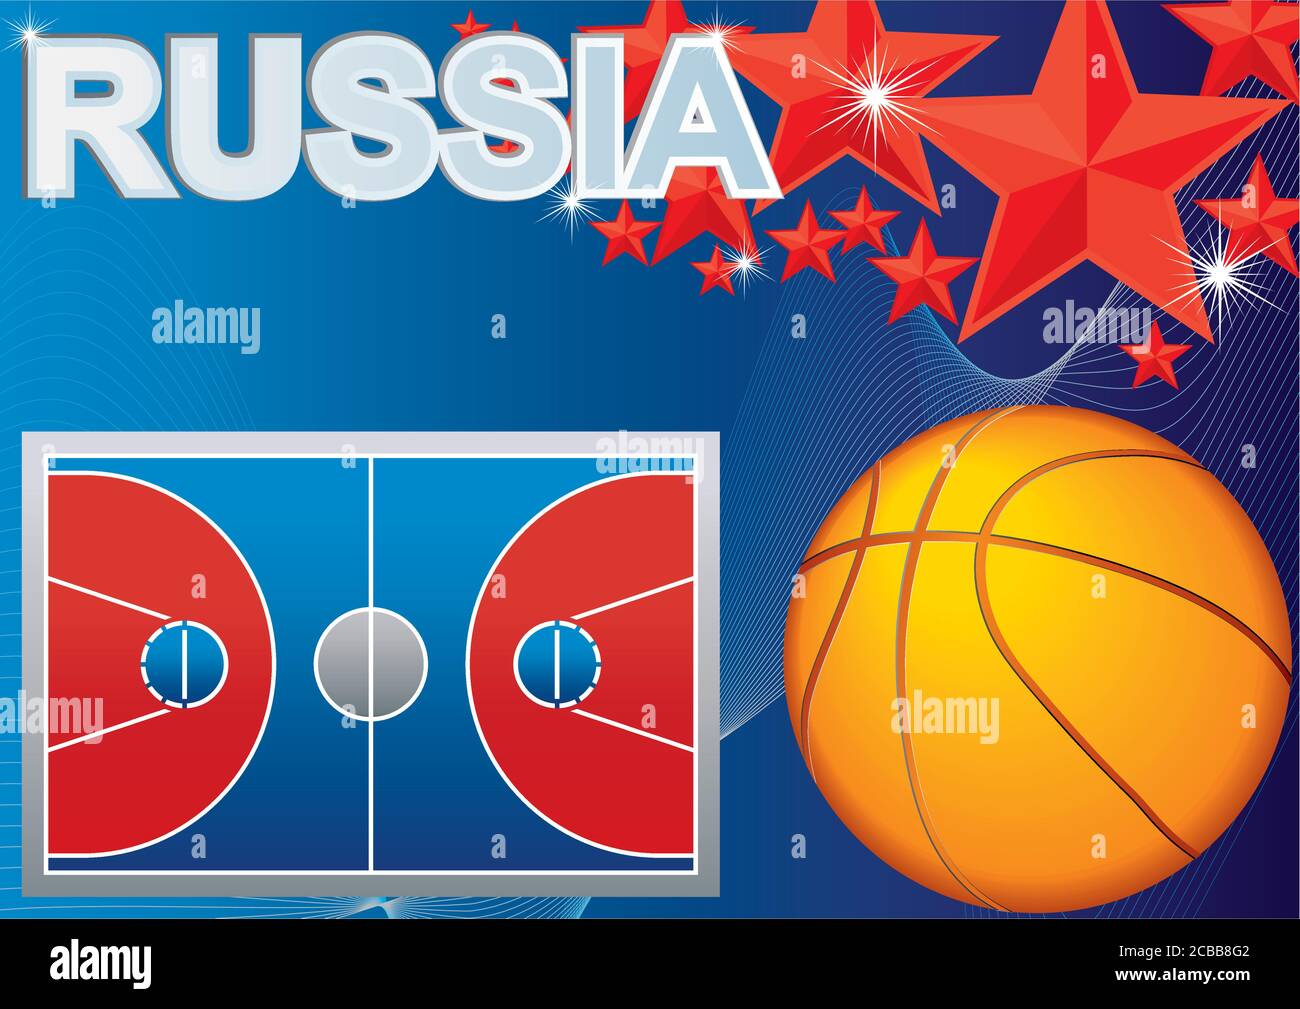 Basketball poster fotografías e imágenes de alta resolución - Página 2 -  Alamy